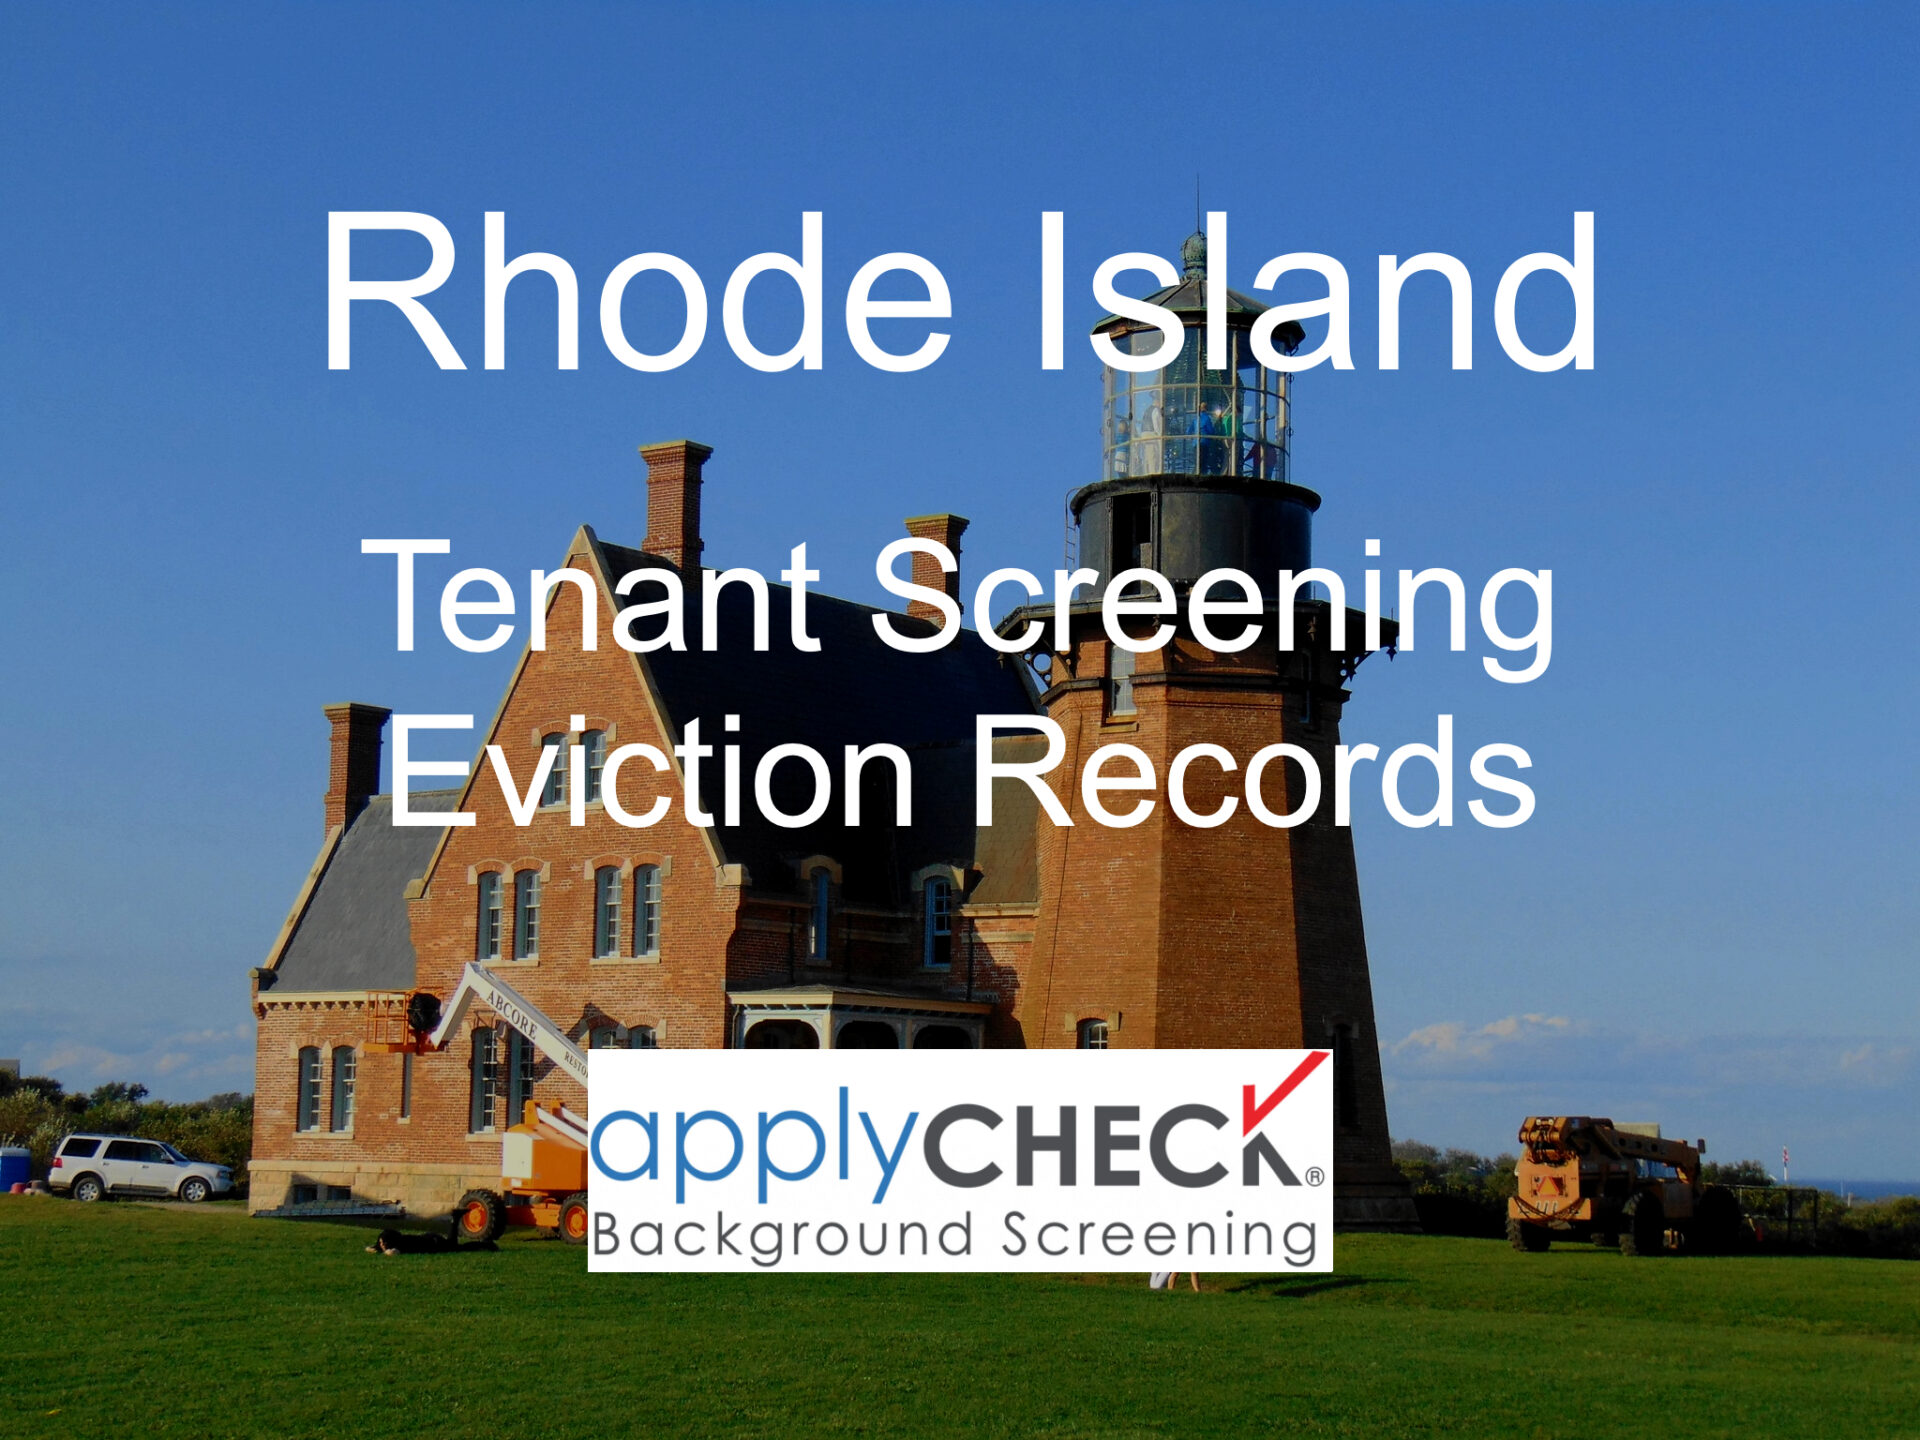 Rhode Island tenant screening image